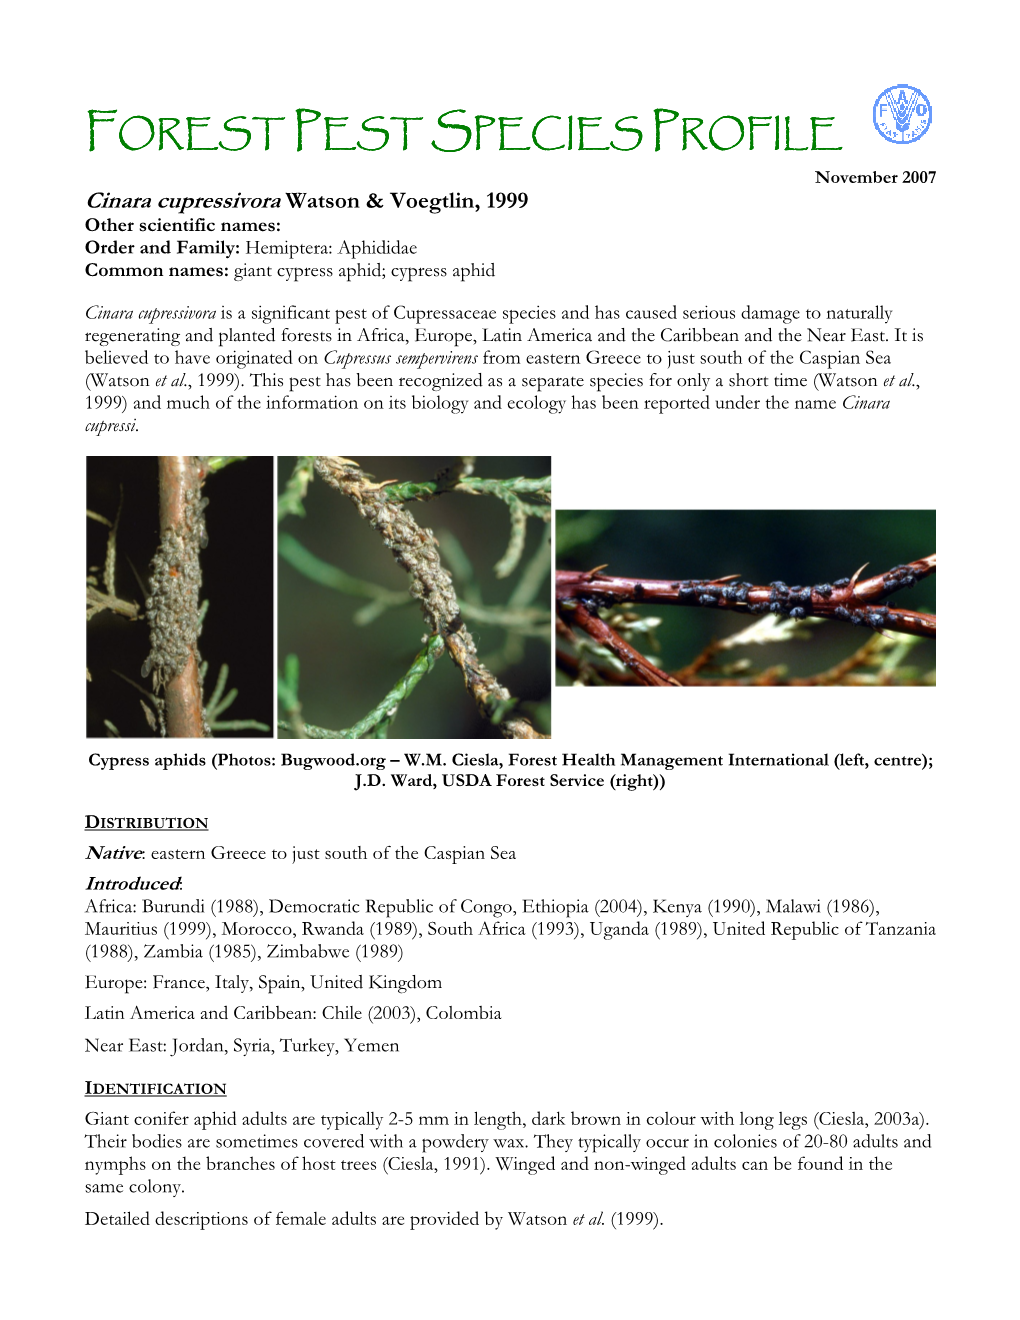 Cinara Cupressivora W Atson & Voegtlin, 1999 Other Scientific Names: Order and Family: Hemiptera: Aphididae Common Names: Giant Cypress Aphid; Cypress Aphid